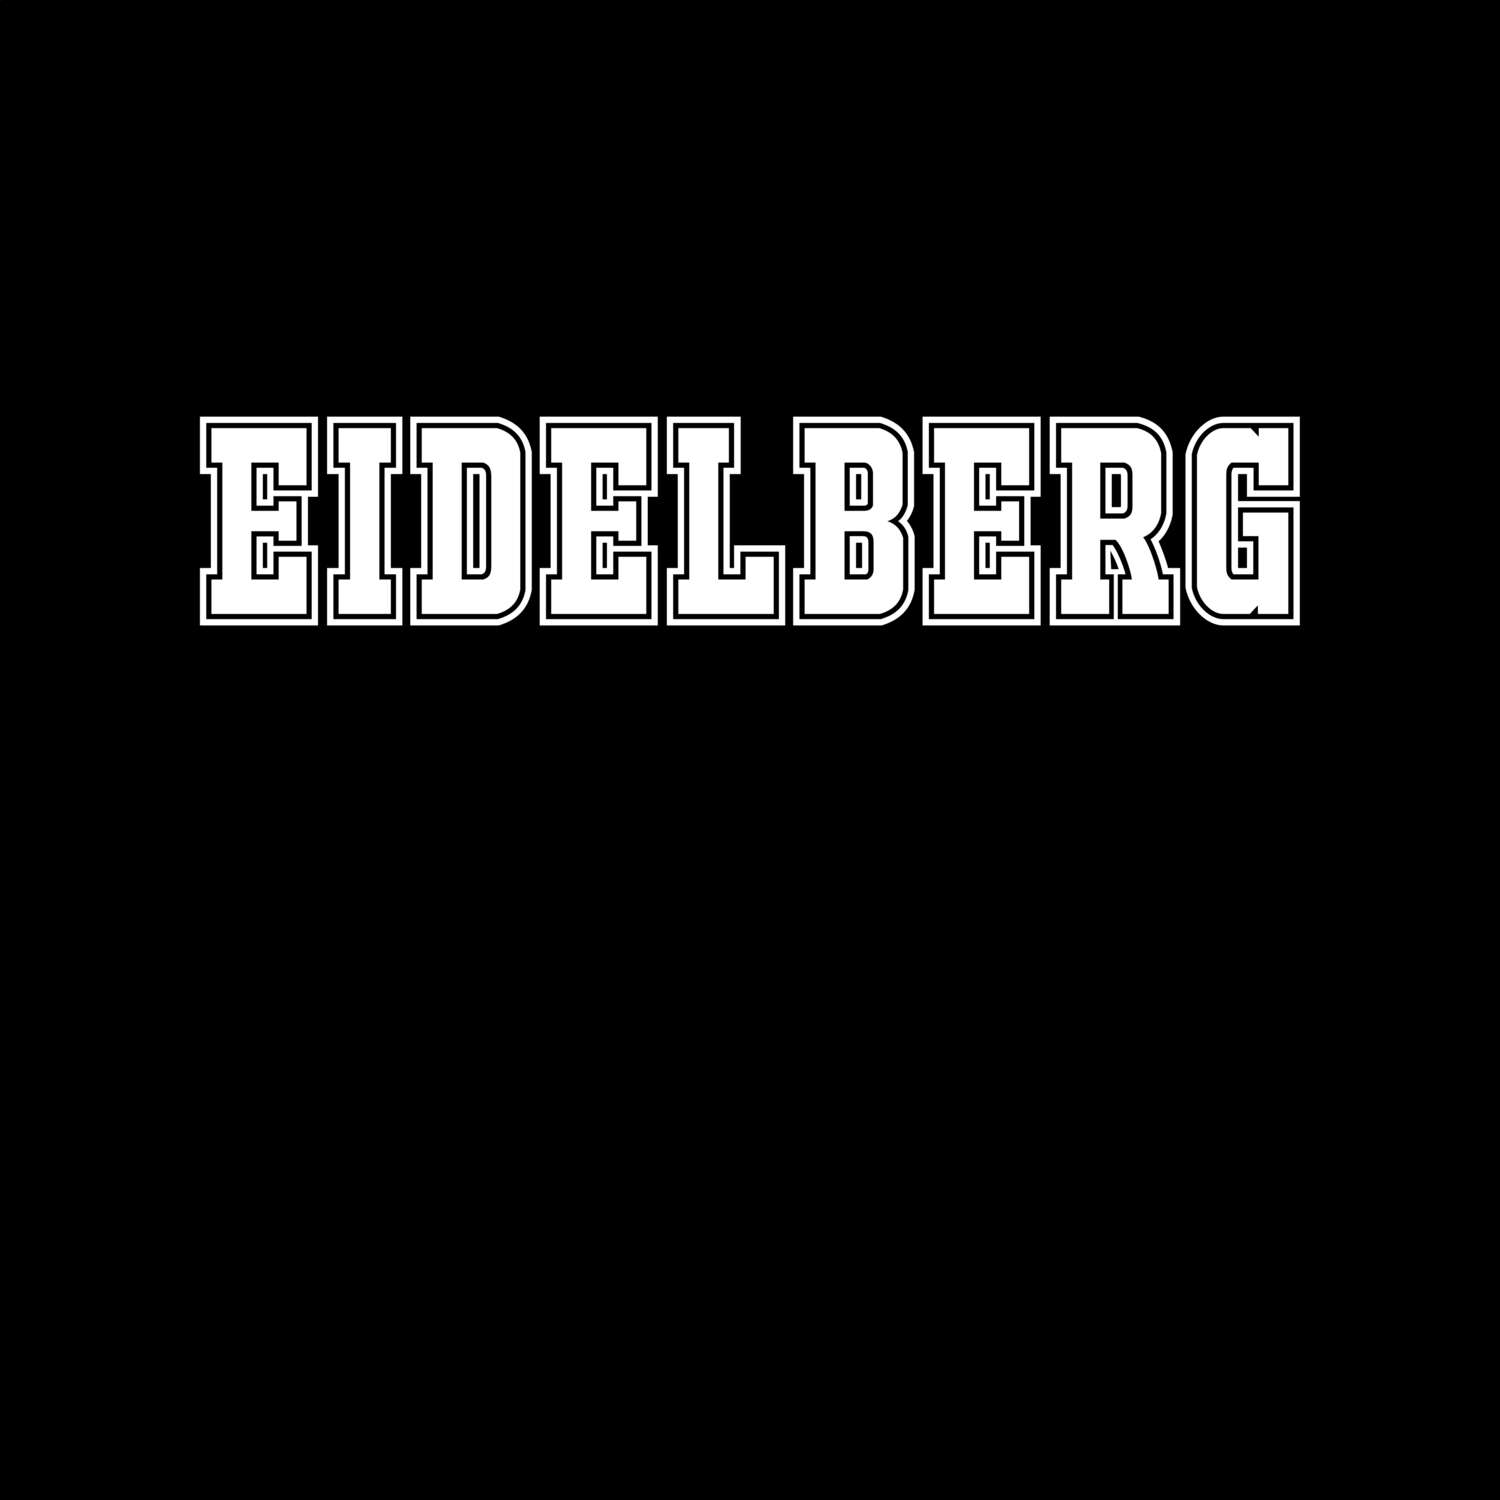 Eidelberg T-Shirt »Classic«